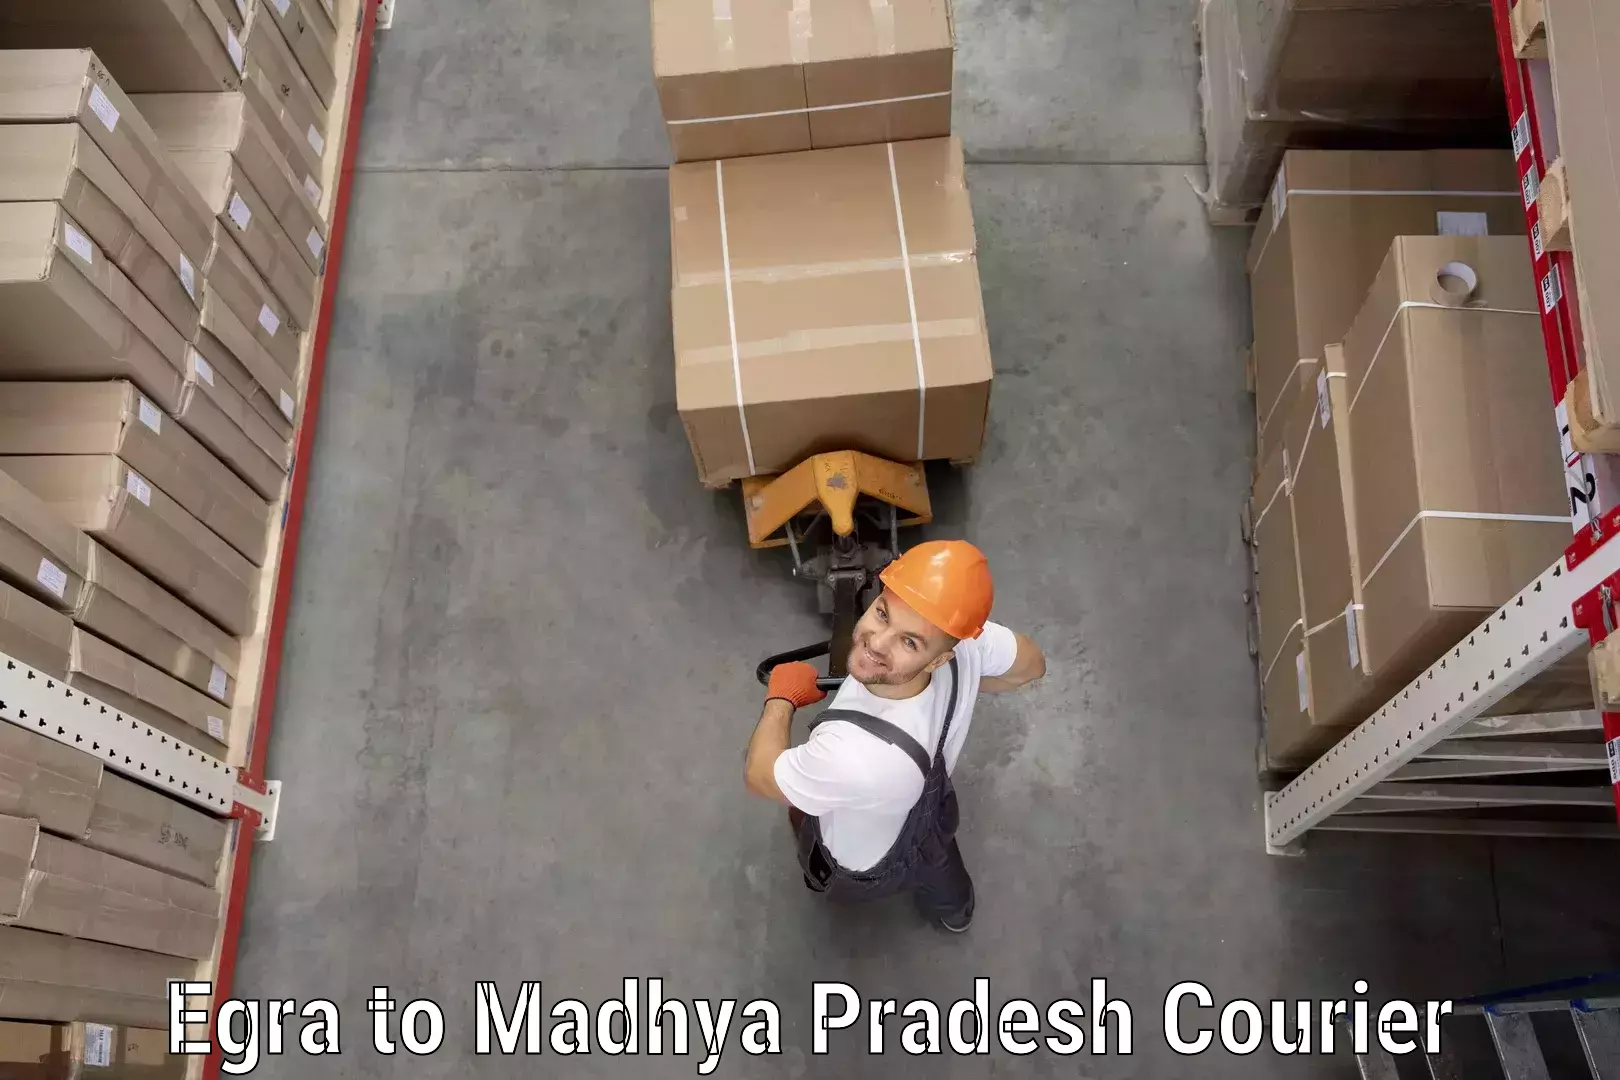 Professional courier handling Egra to Madhya Pradesh